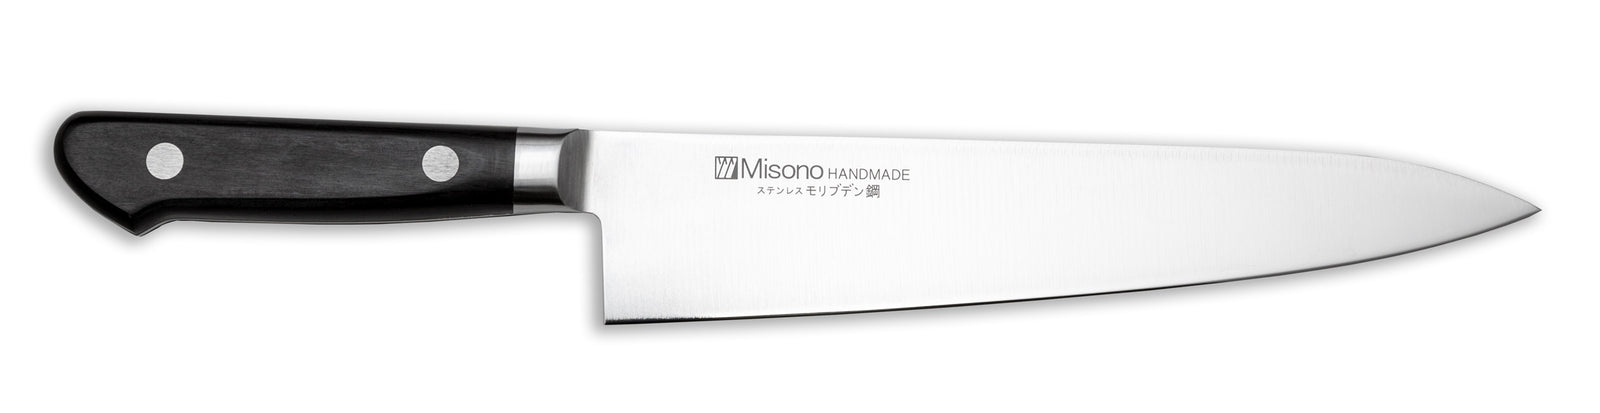 Misono UX10 Chef's Knife (Gyutou), 10.6-inch (270mm) - #714 